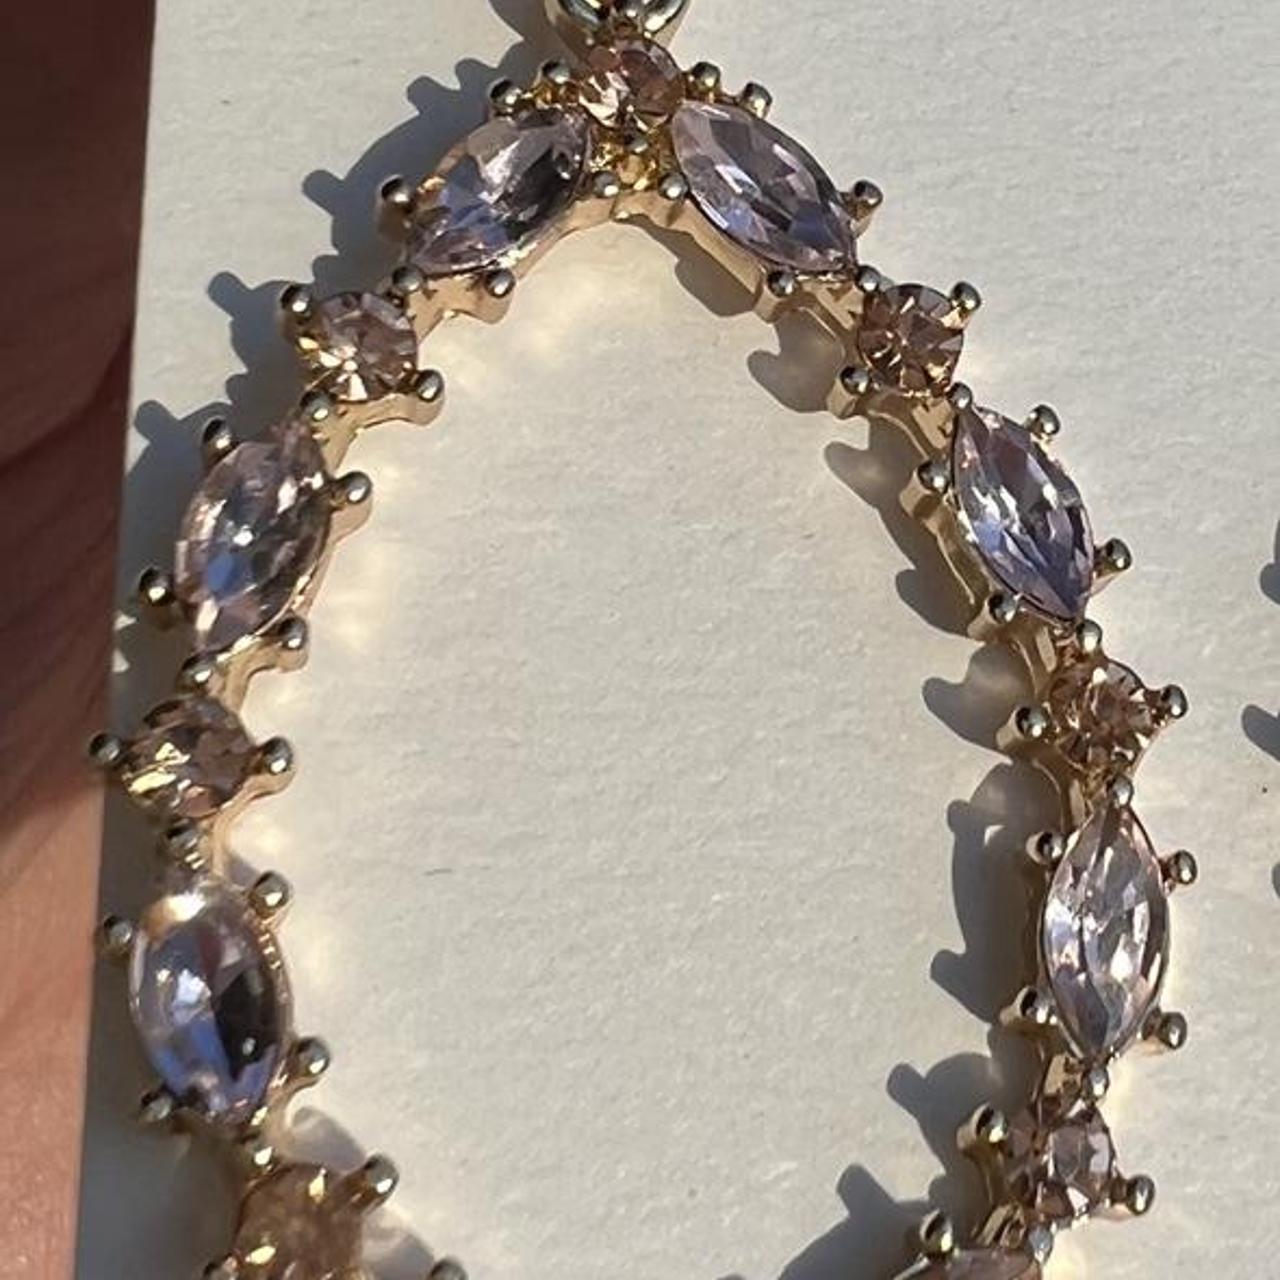 Jessica Simpson Women's Gold Jewellery